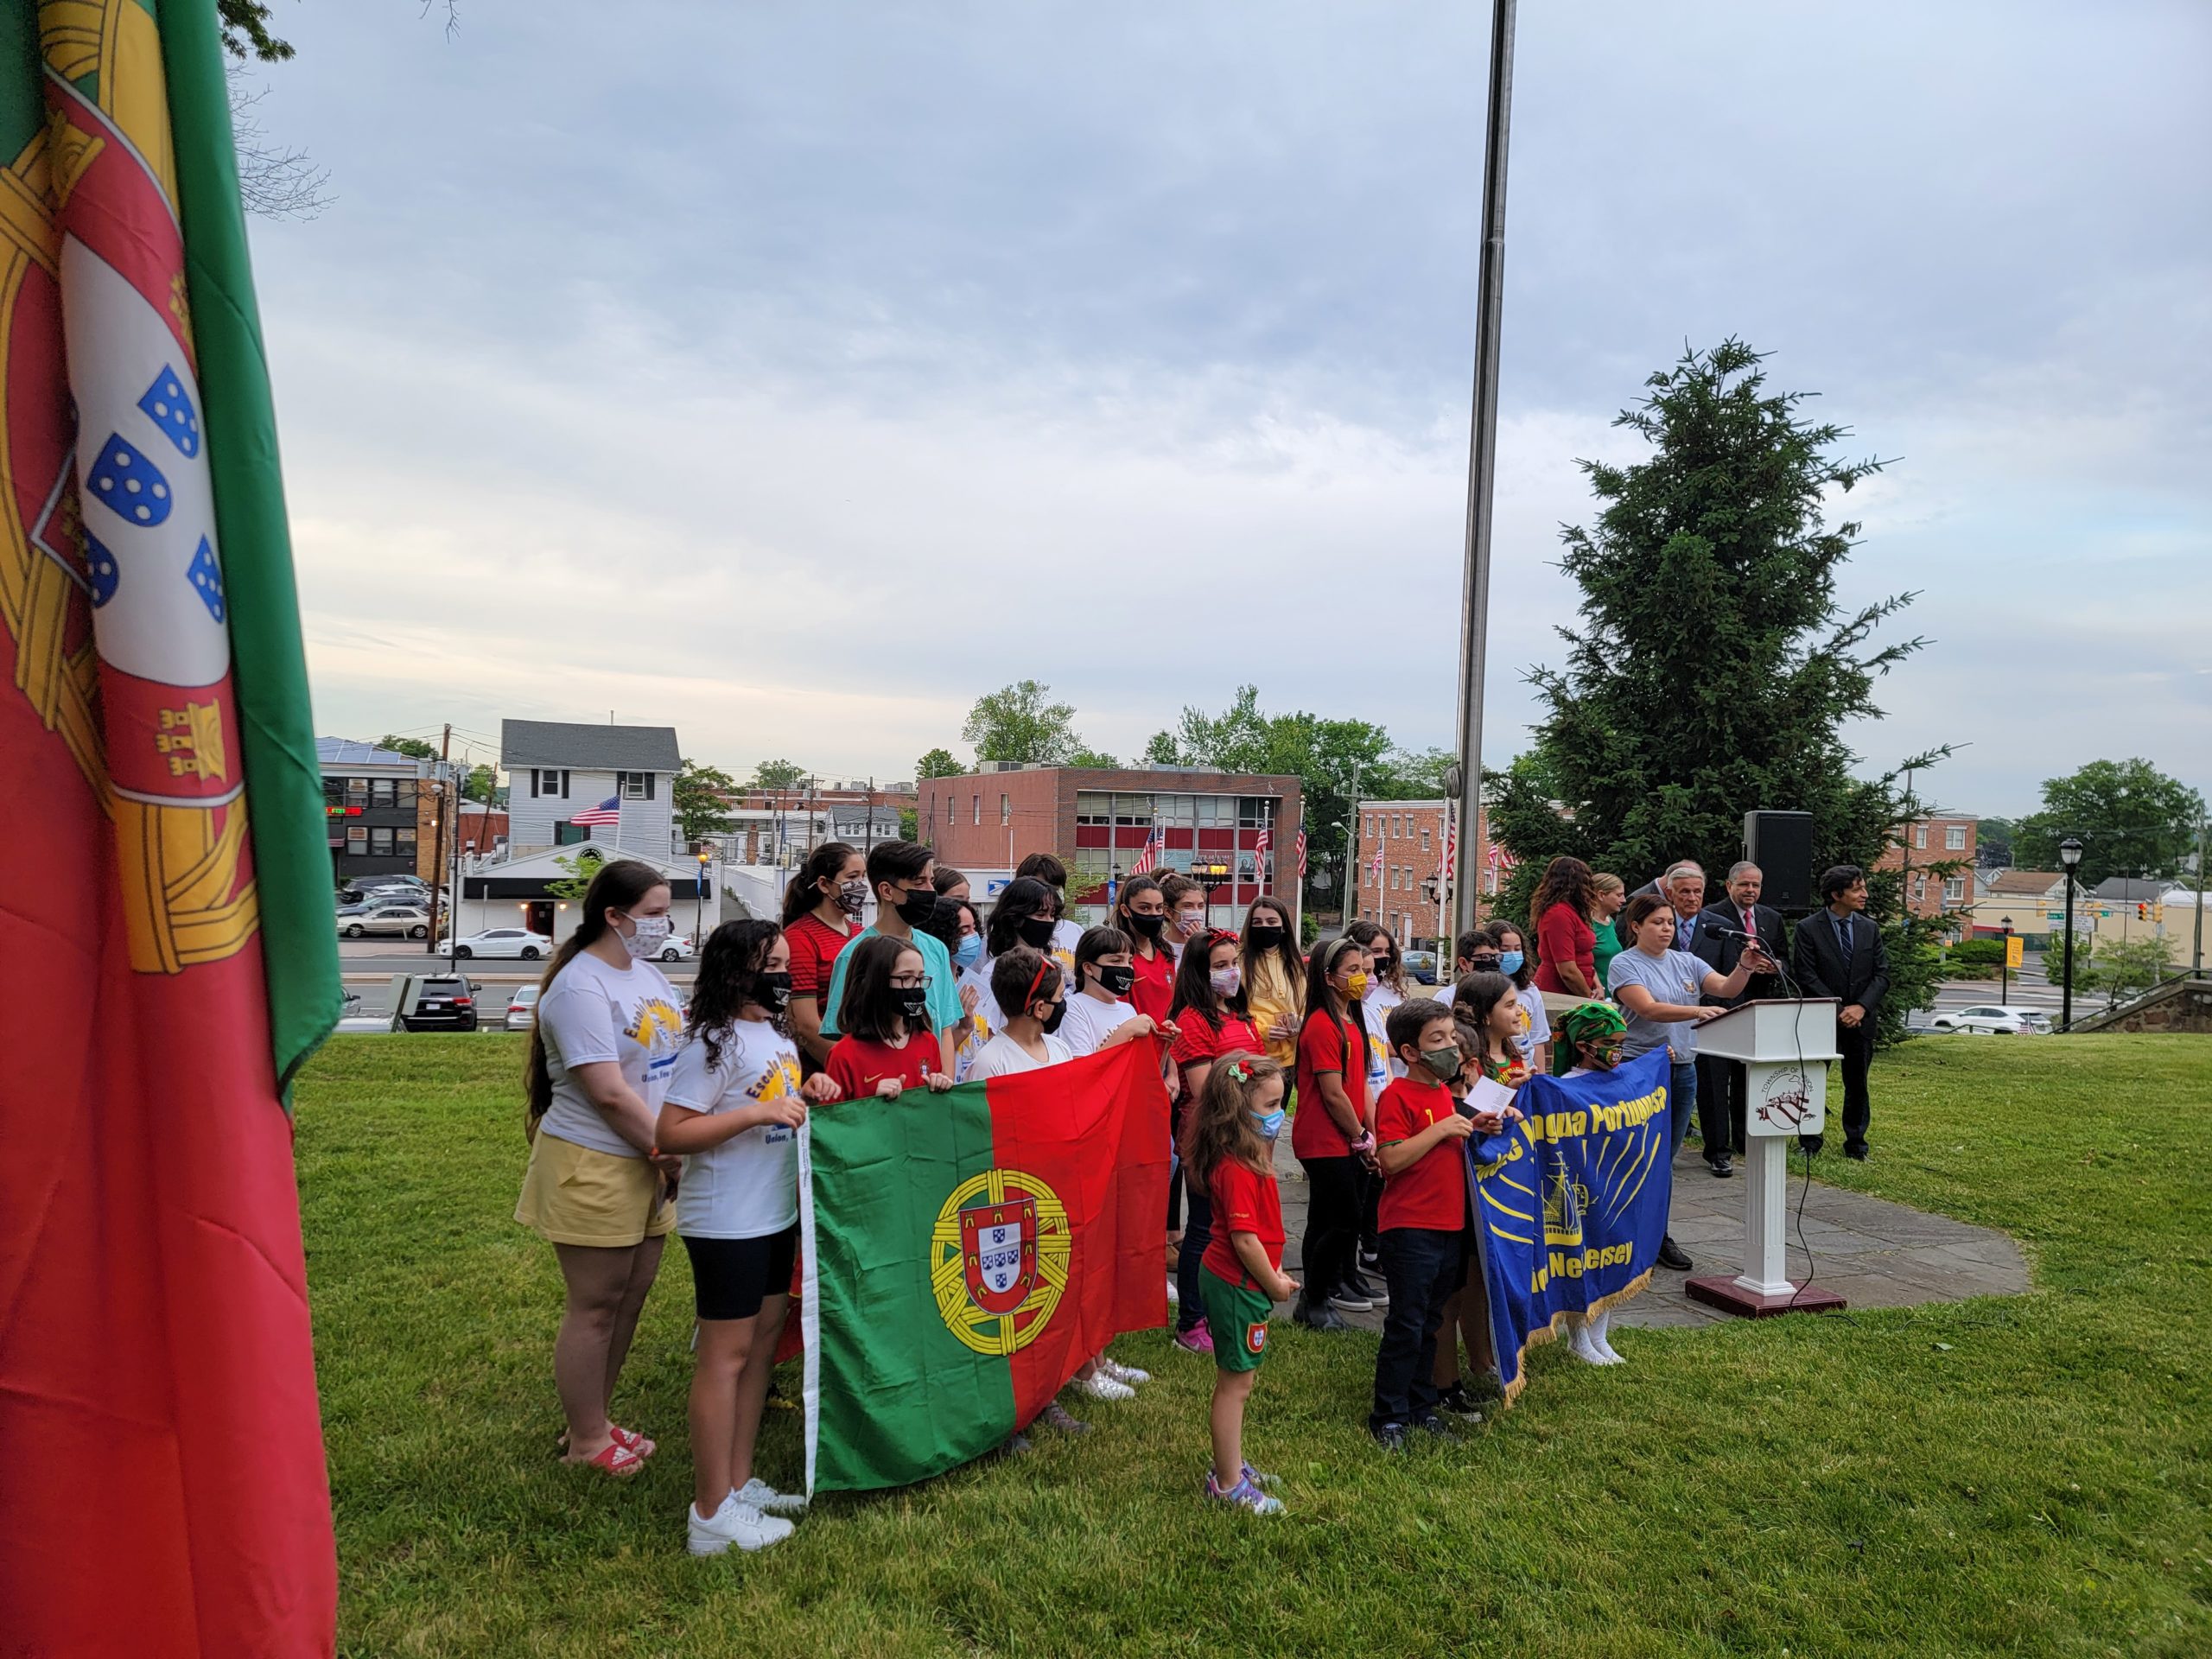 Raising The Flag Ceremony in Union